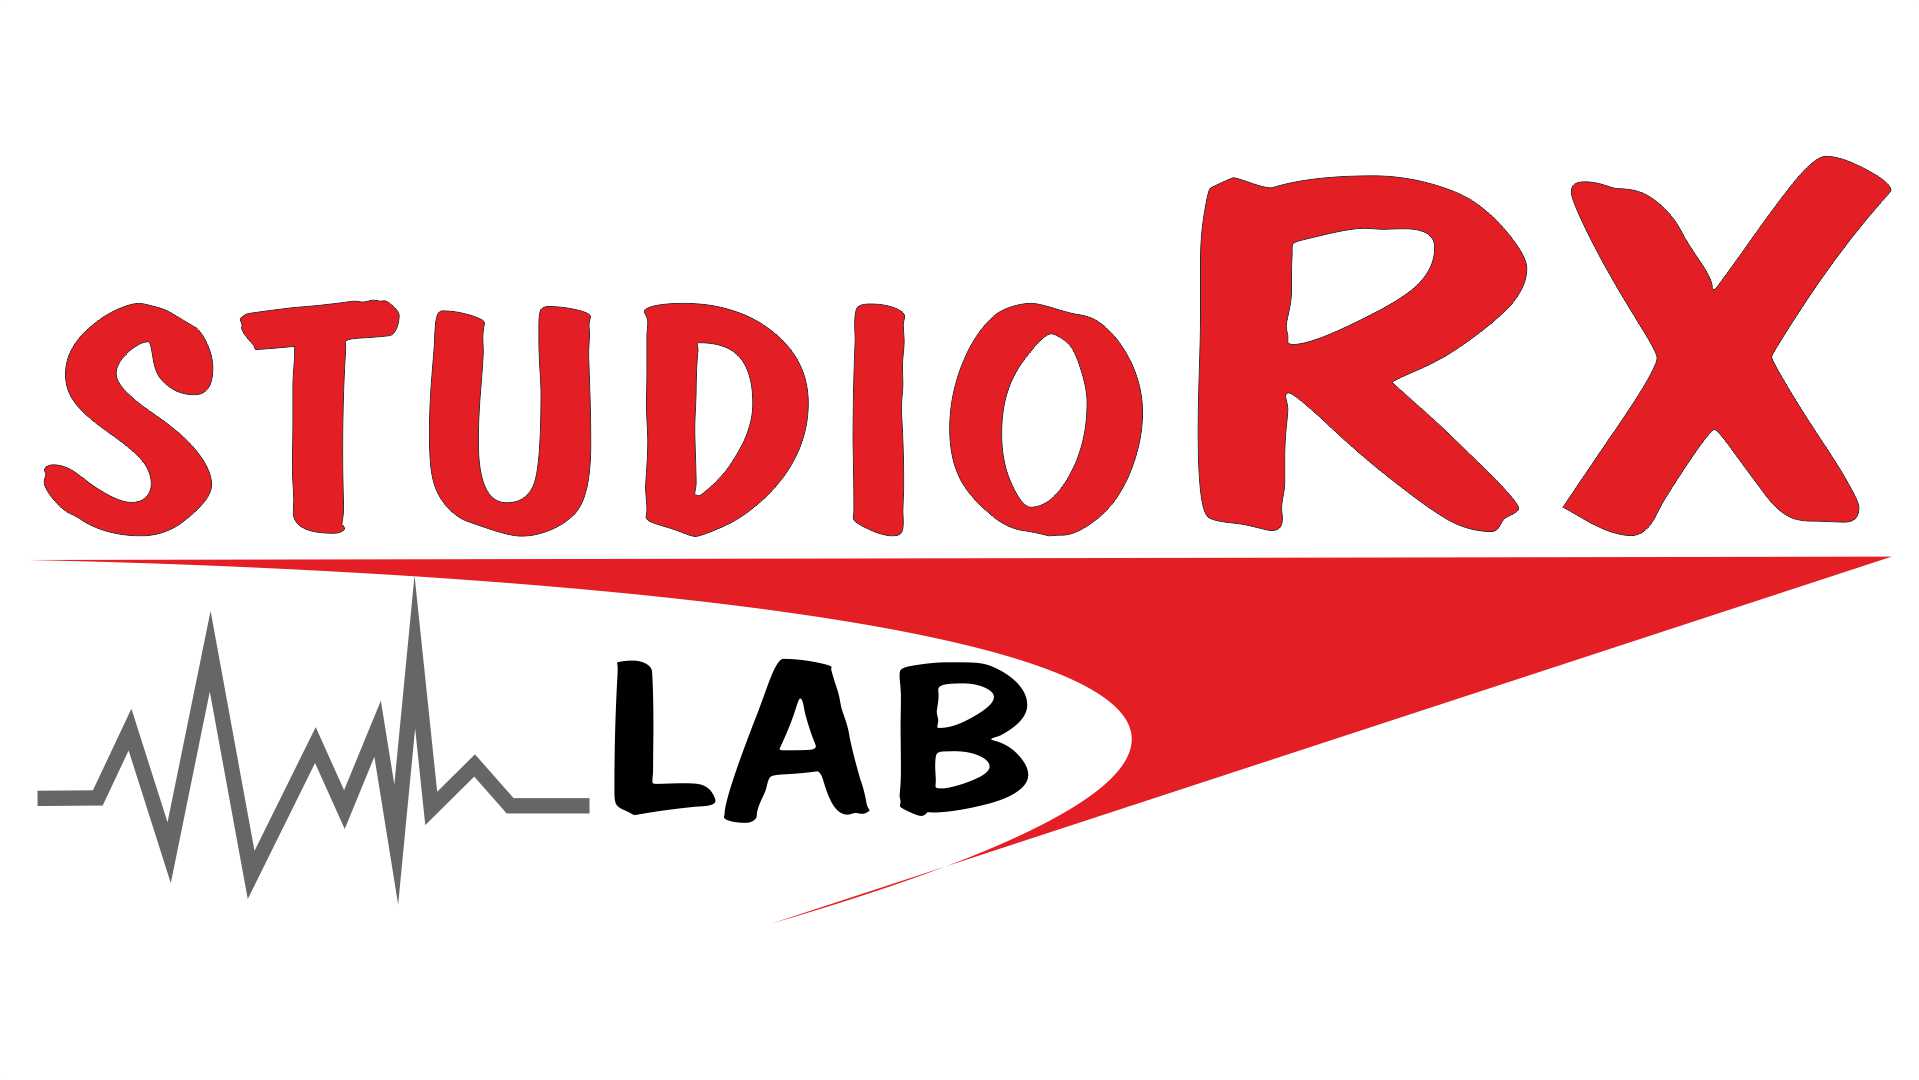 Studio RX lab